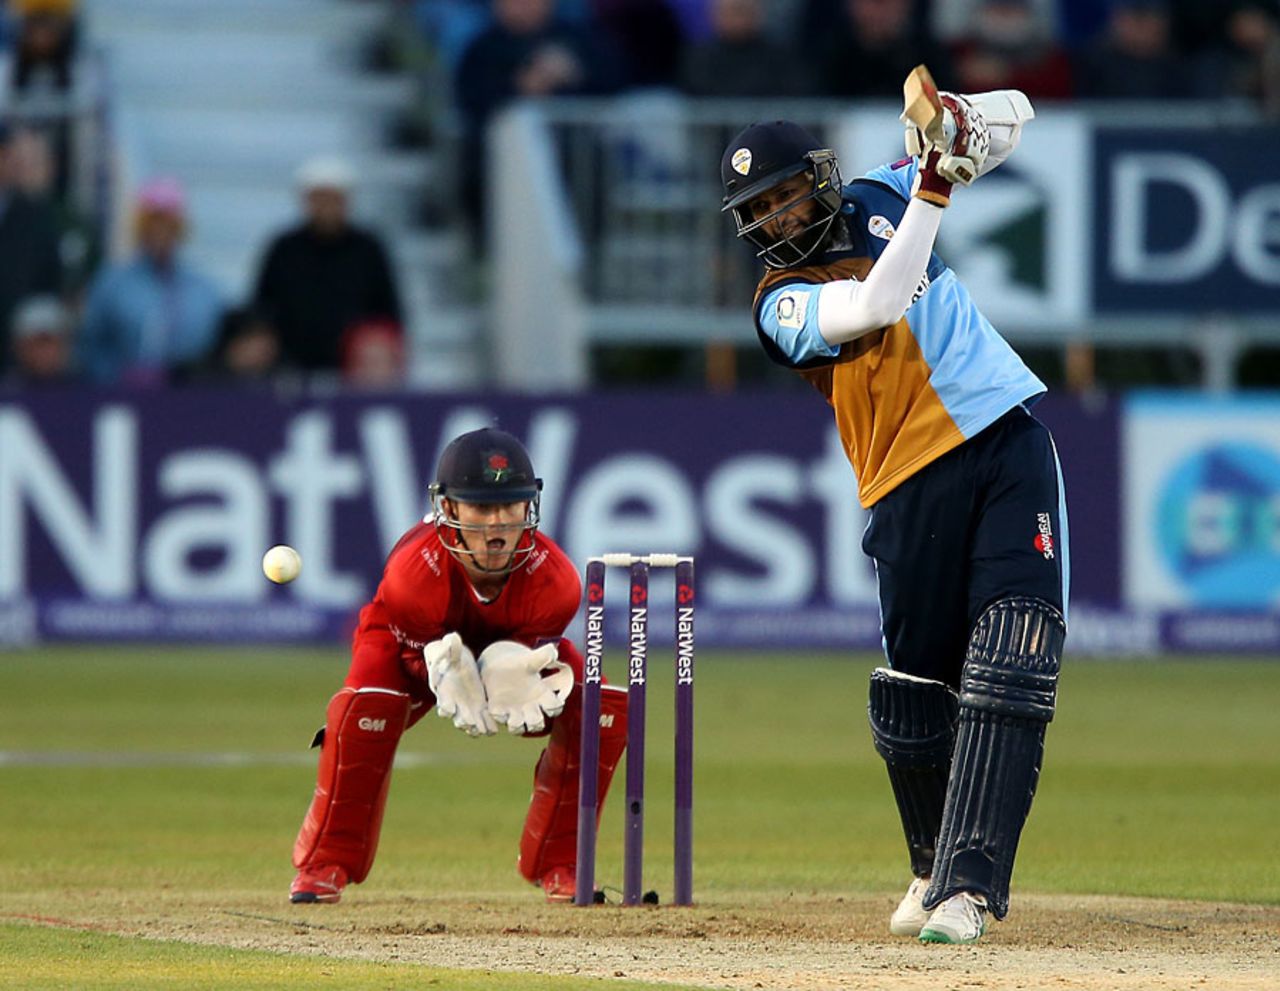 Hashim Amla made 51 off 37 balls in Derbyshire's chase, Derbyshire v Lancashire, NatWest T20 Blast, North Group, May 29, 2015